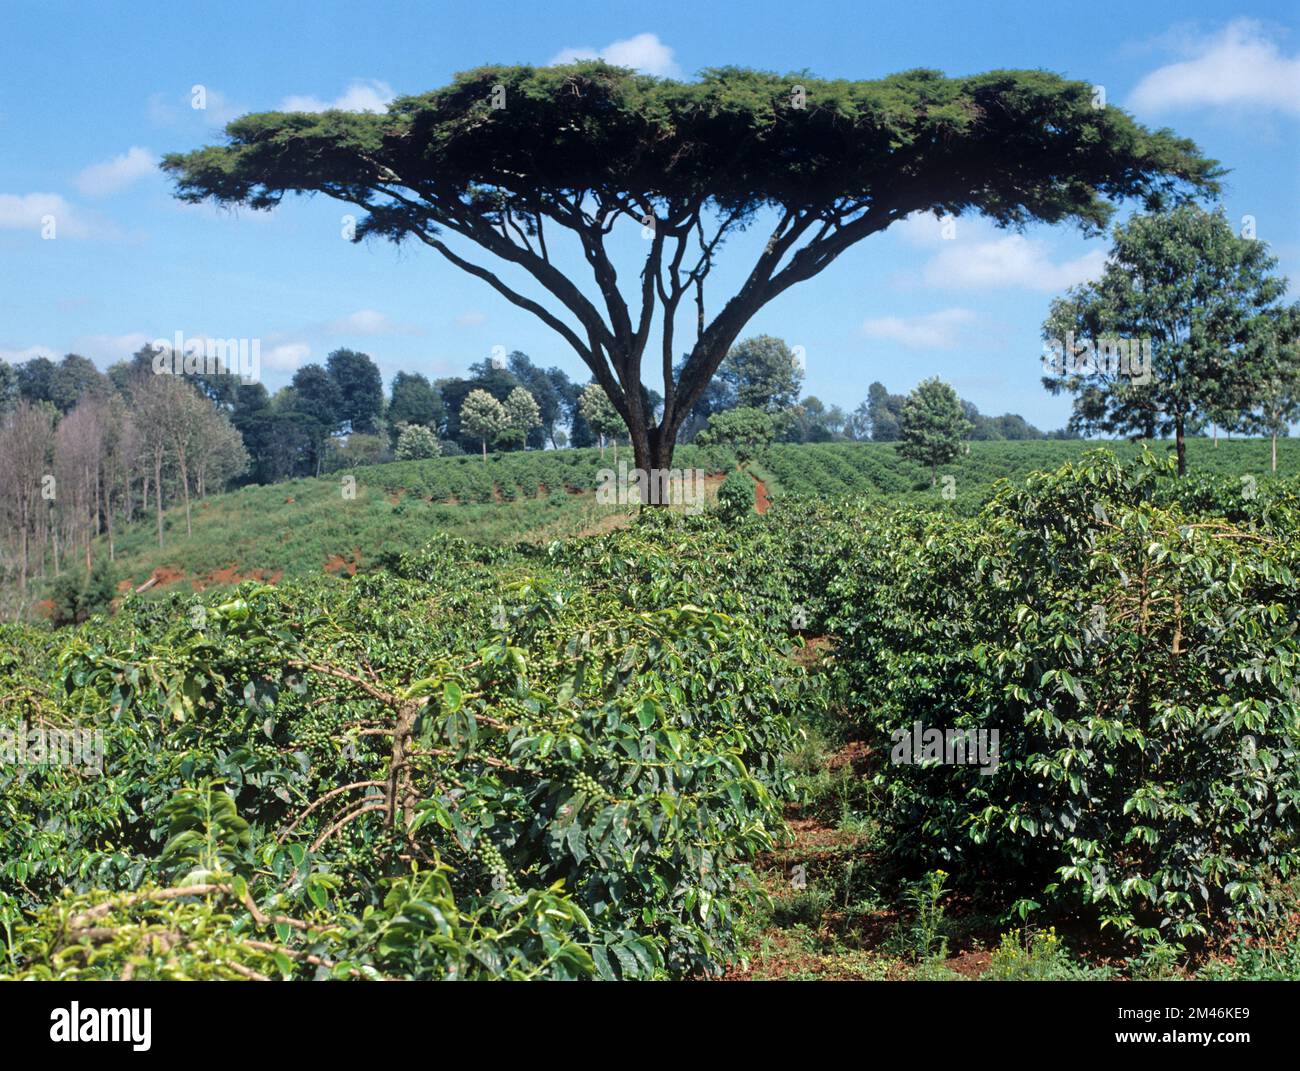 Plantation de café arabica (Coffea arabica) arbustes mûrs dans des baies vertes avec arbre à épines d'Acacia près de Nairobi, Kenya Banque D'Images